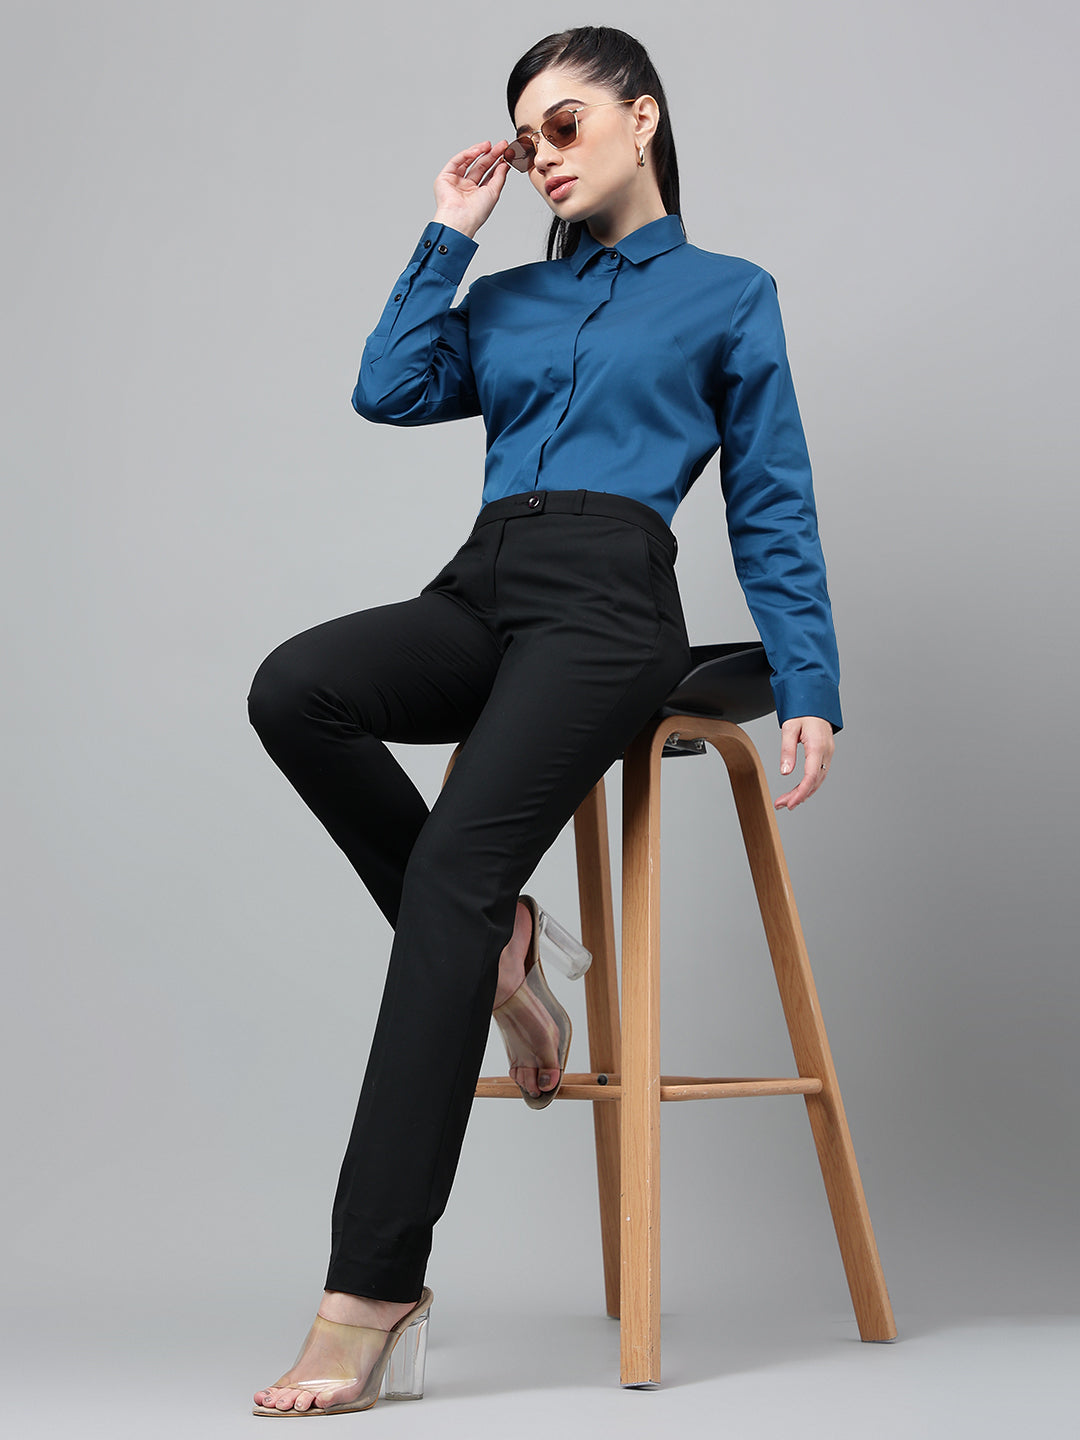 Women Turquoise Solid Cotton Satin Regular Fit Formal Shirt